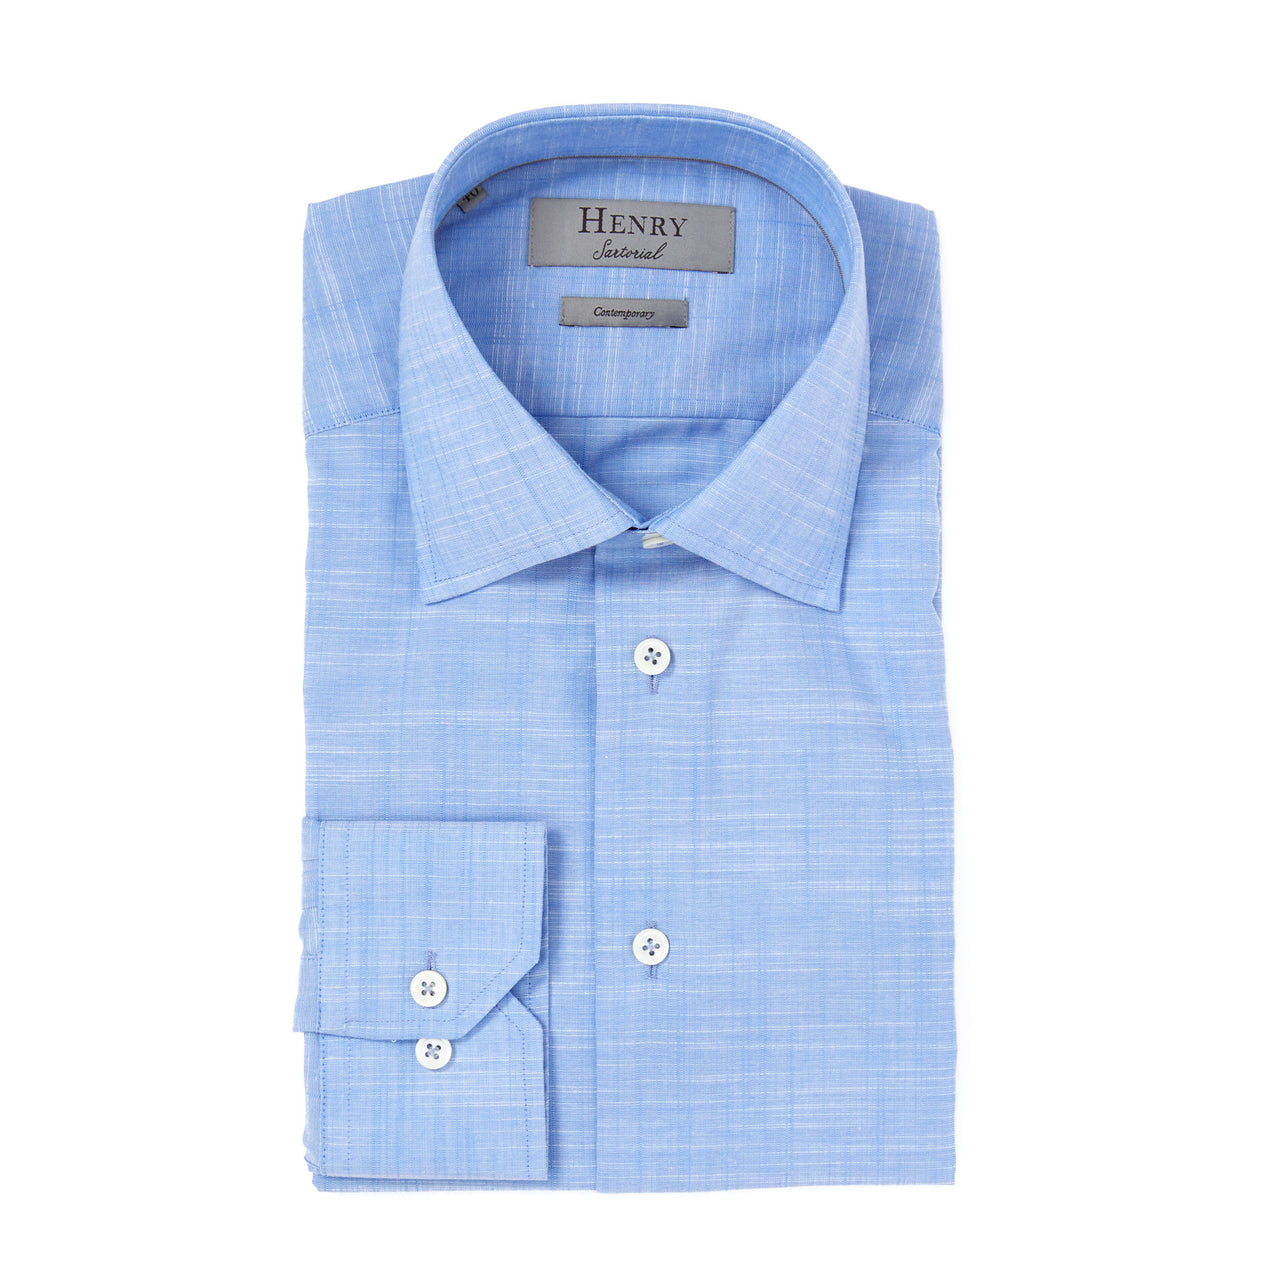 HENRY SARTORIAL Linen Textured Shirt Contemporary SKY